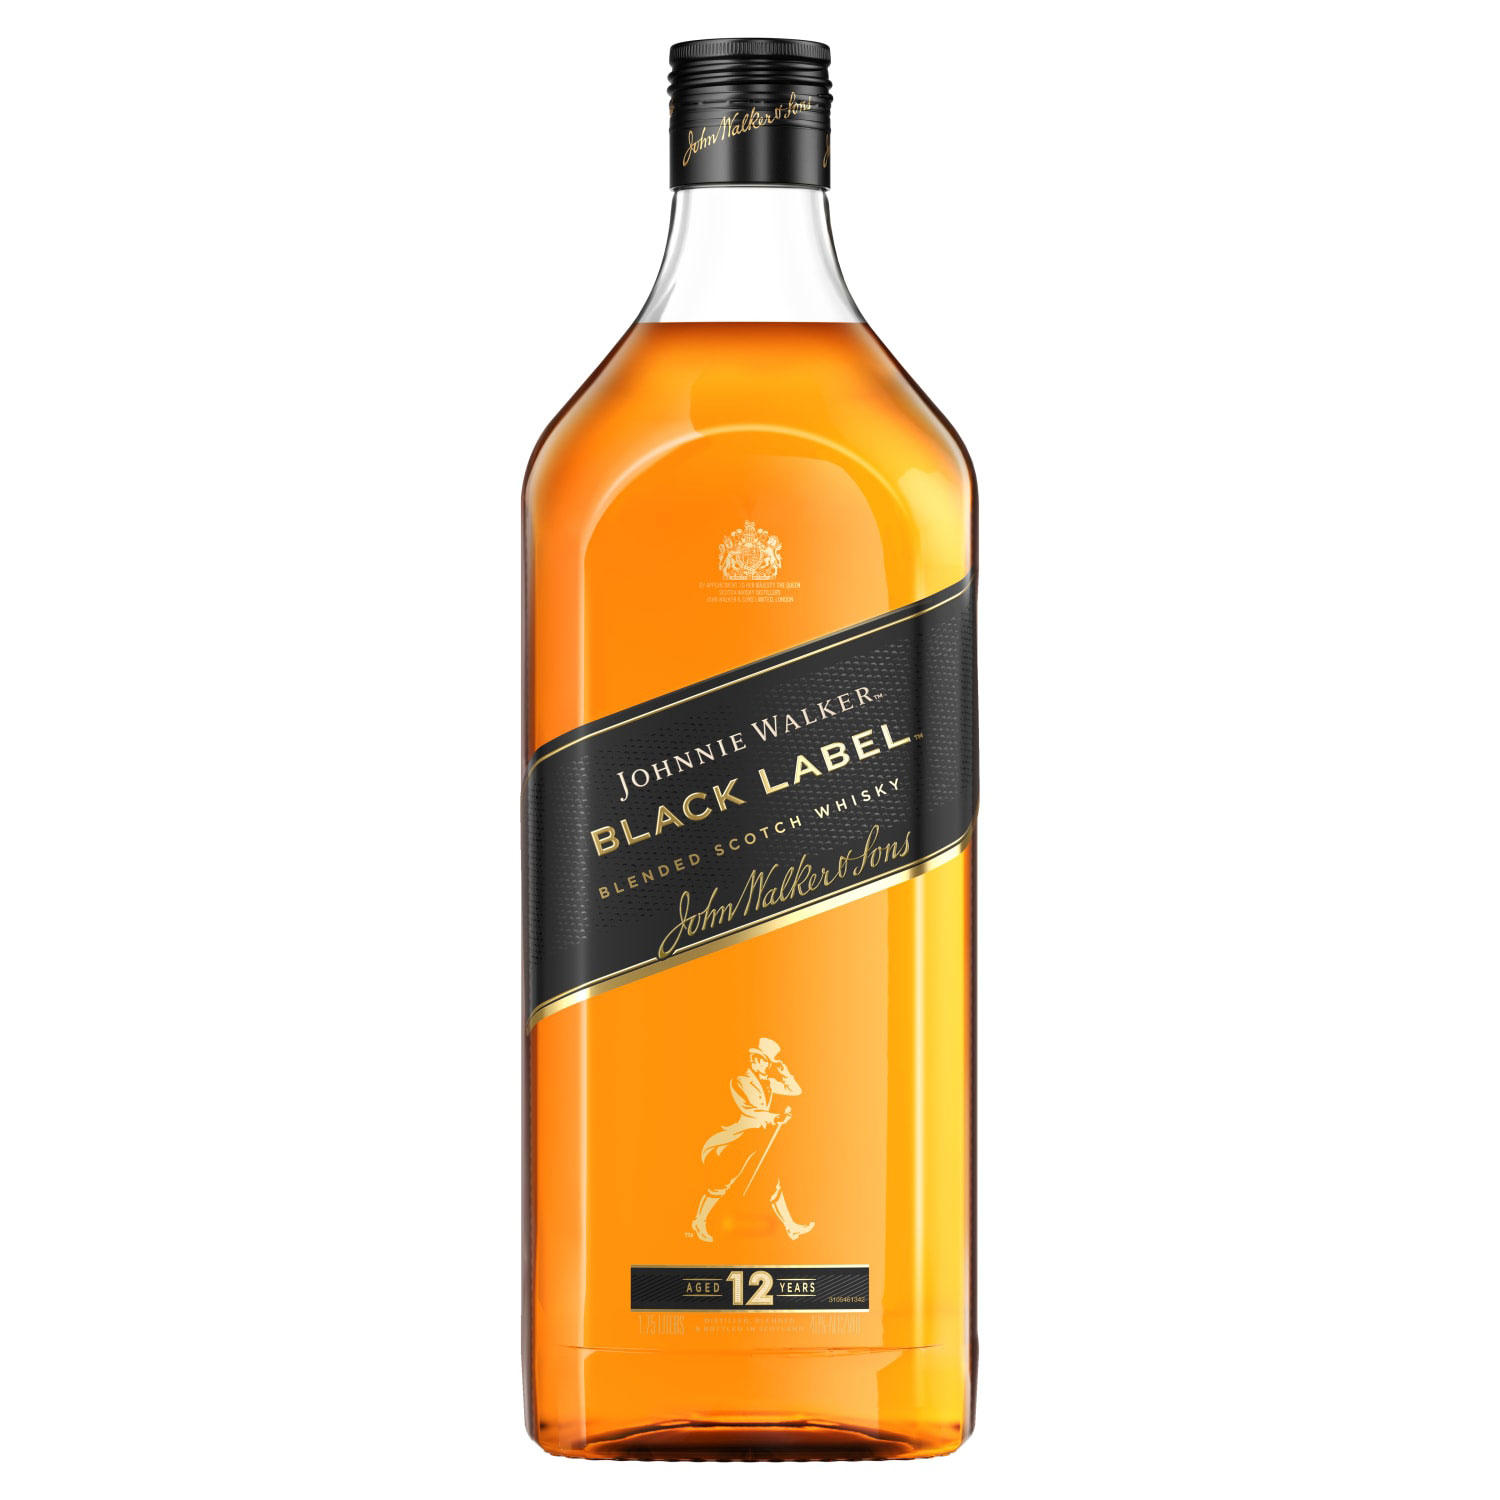 Johnnie Walker Black Scotch $29.91 and Buffalo Trace Bourbon $21.78 on sale at Sam's Club. YMMV